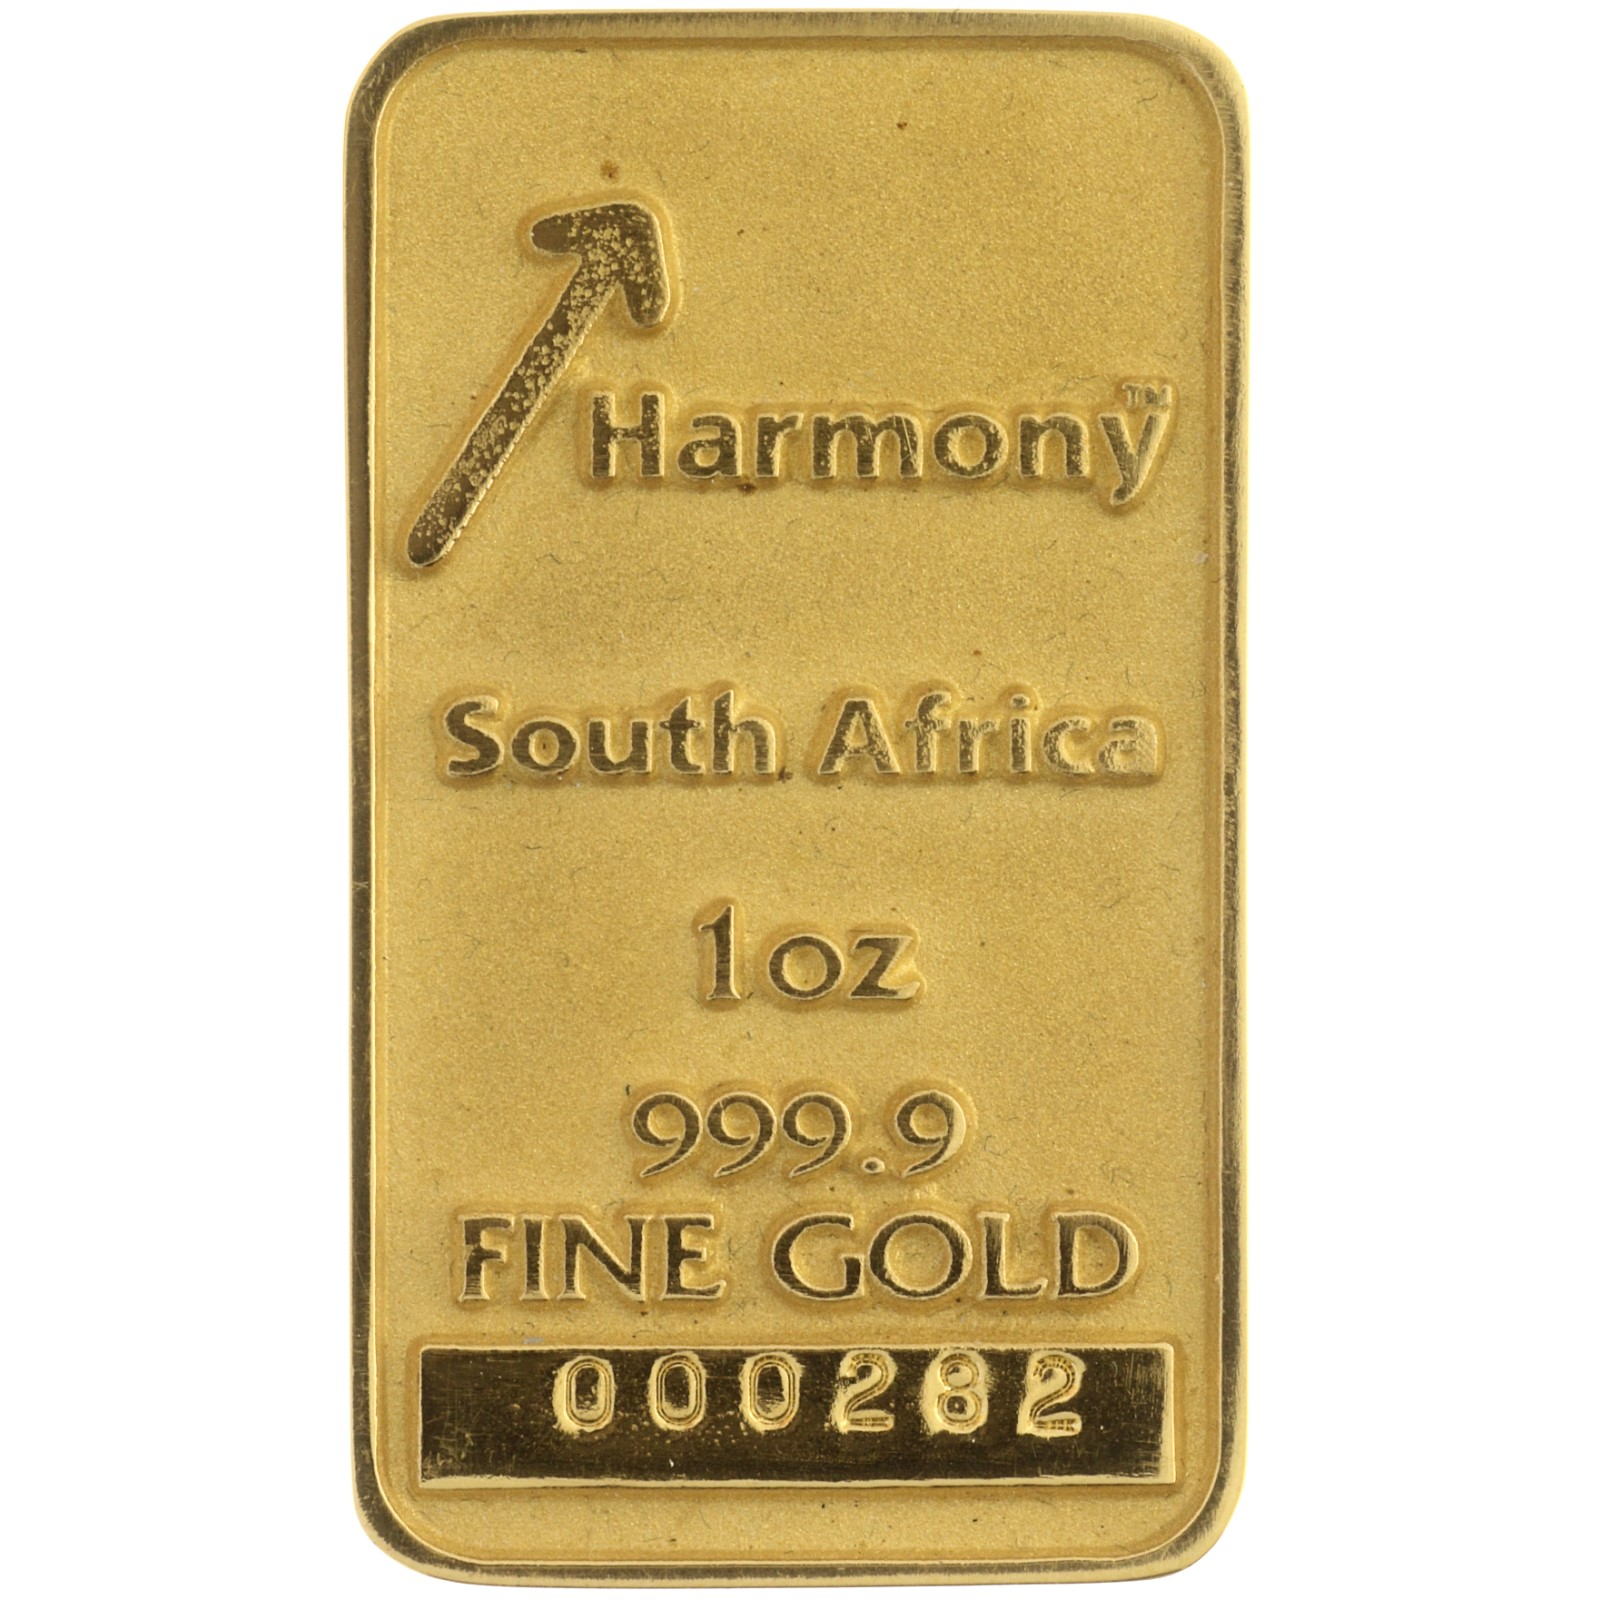 South Africa - 1oz - gold - Gold Bar